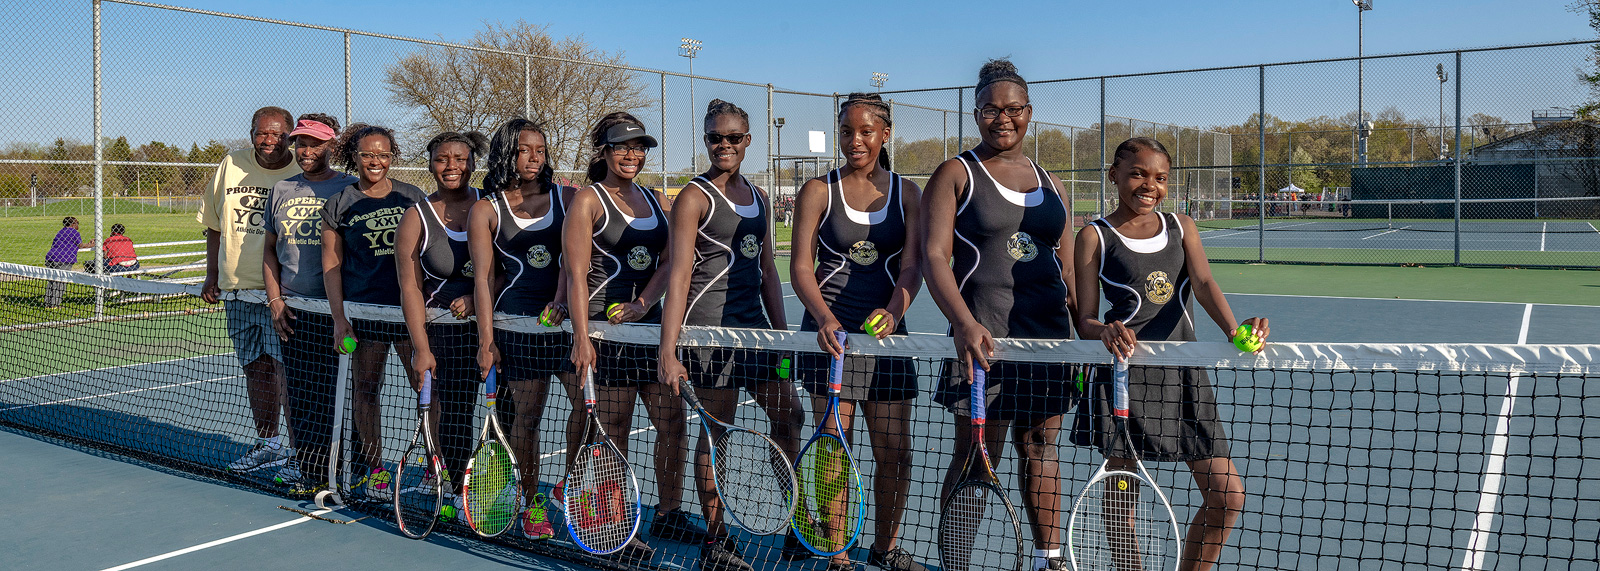 The YCHS Girls Tennis Team